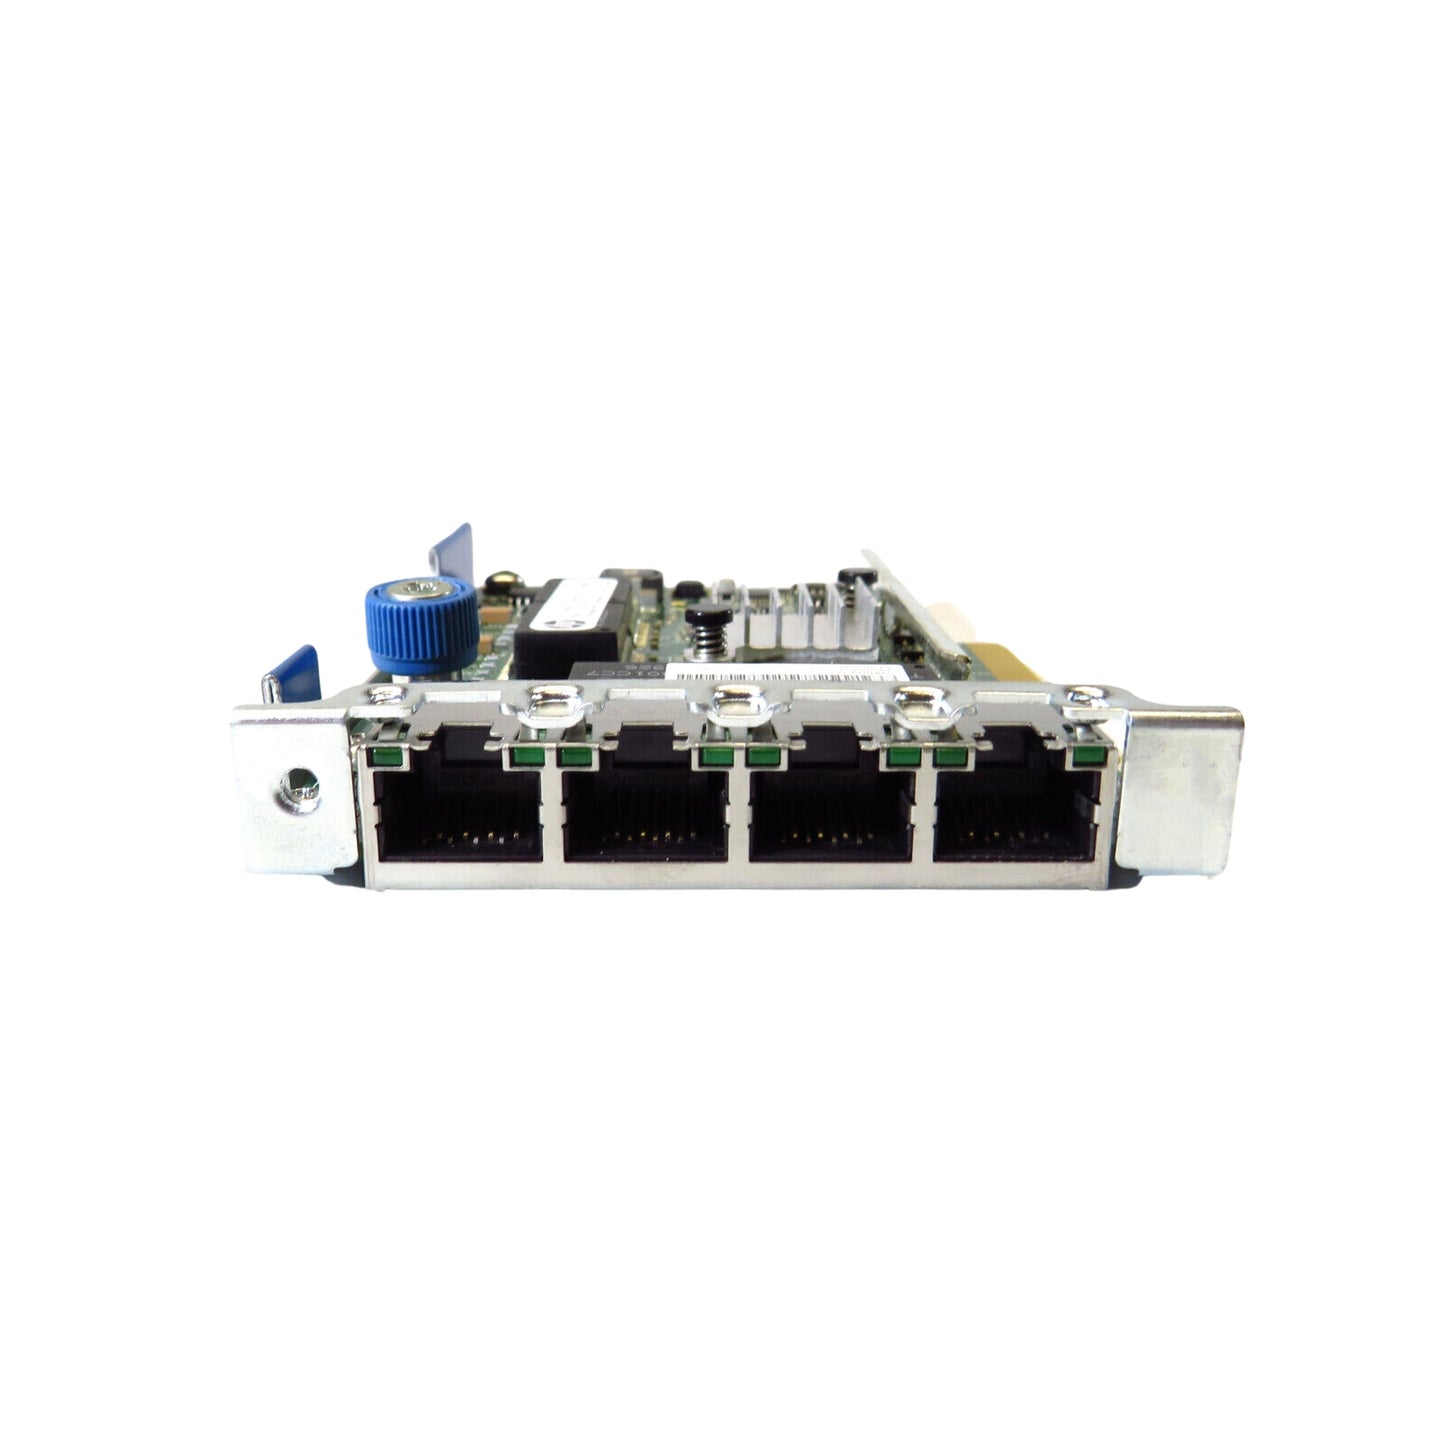 HP 789897-001 331FLR FlexLOM 1GB 4 Port Ethernet Adapter Card (Refurbished)